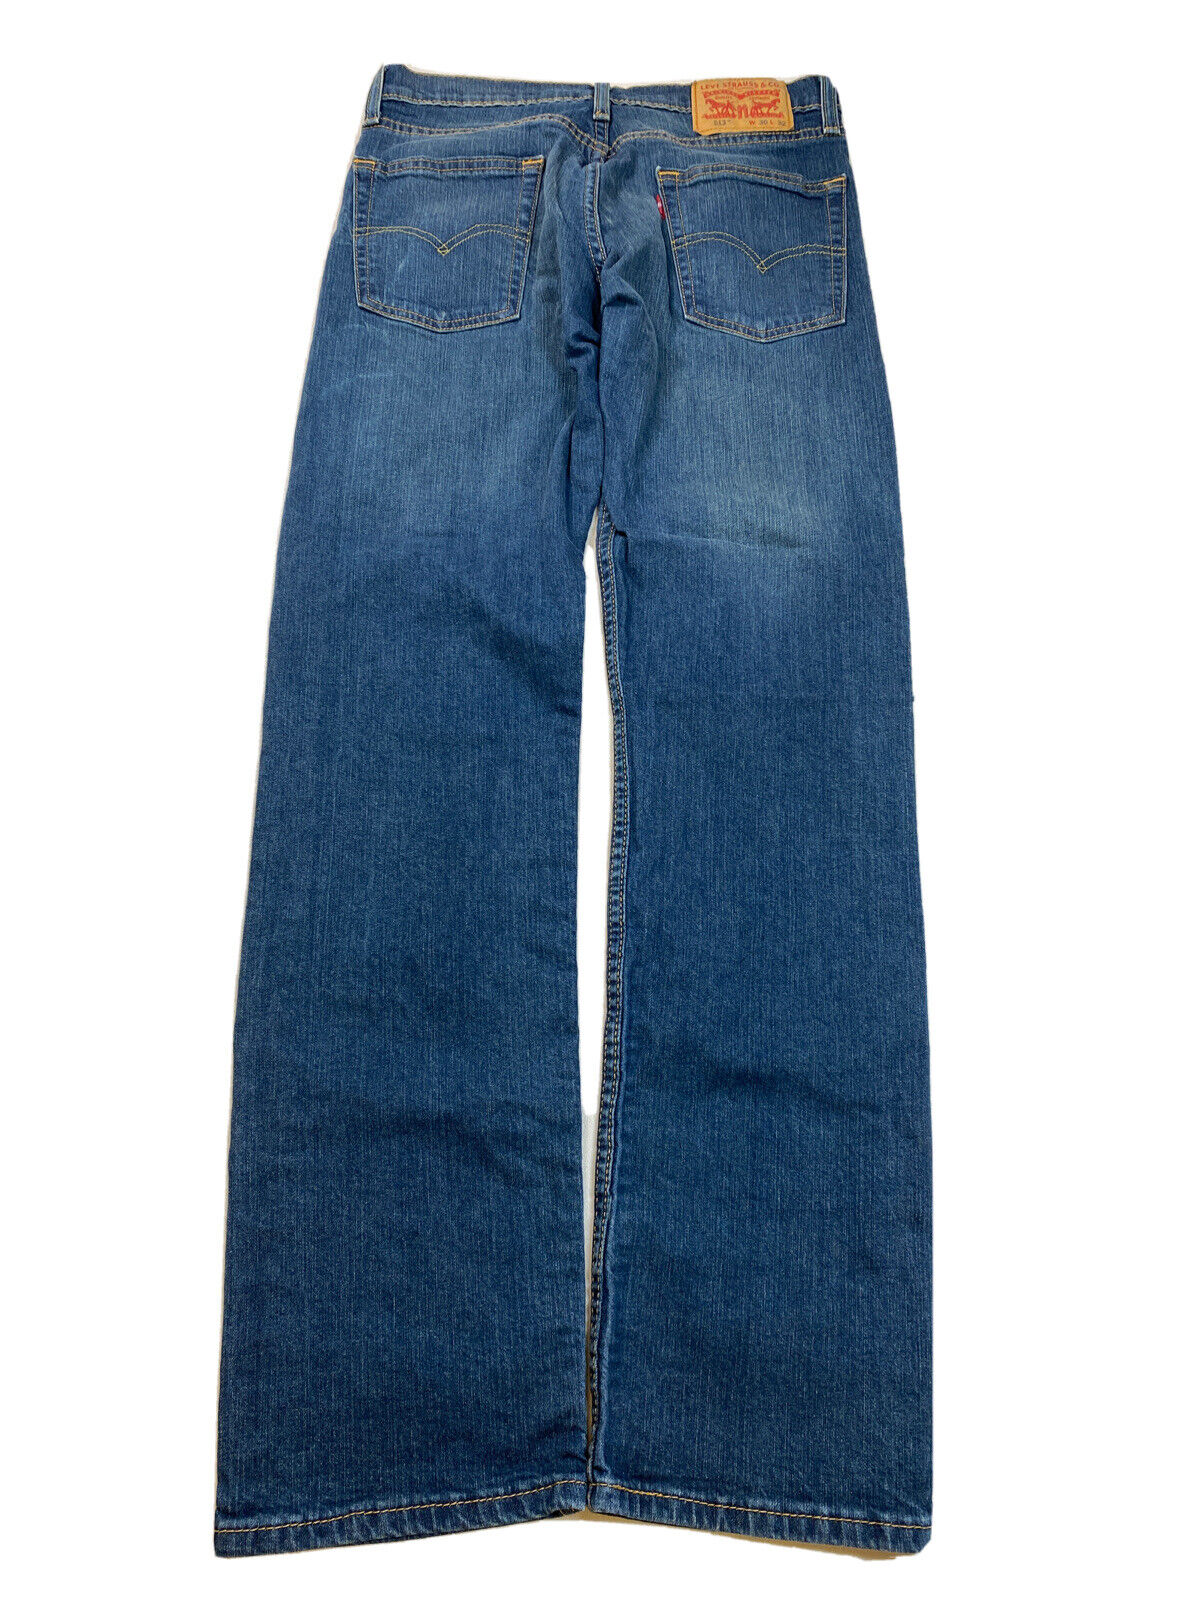 Levis Men's Medium Wash 513 Slim Straight Denim Jeans - 30x32